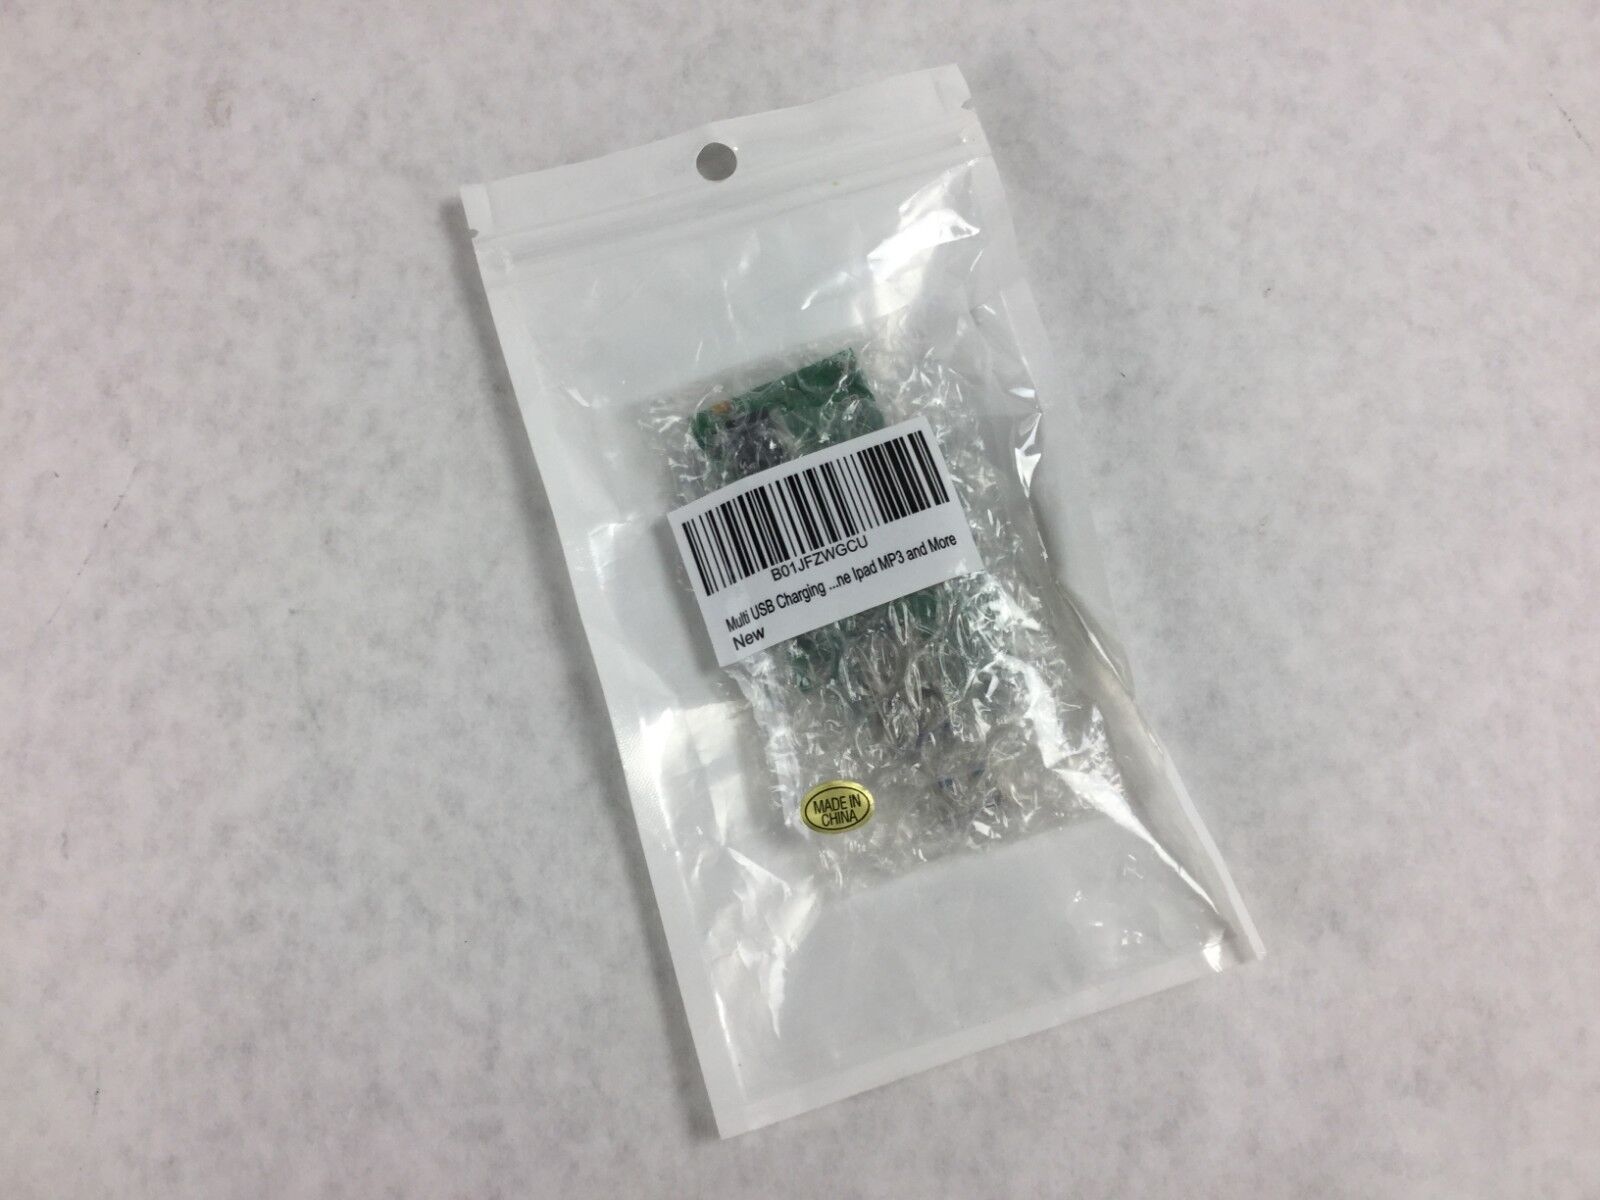 B01JFZWGCU Multi USB Charging Board  (Ipad MP3)   Factory Sealed Bag of 2